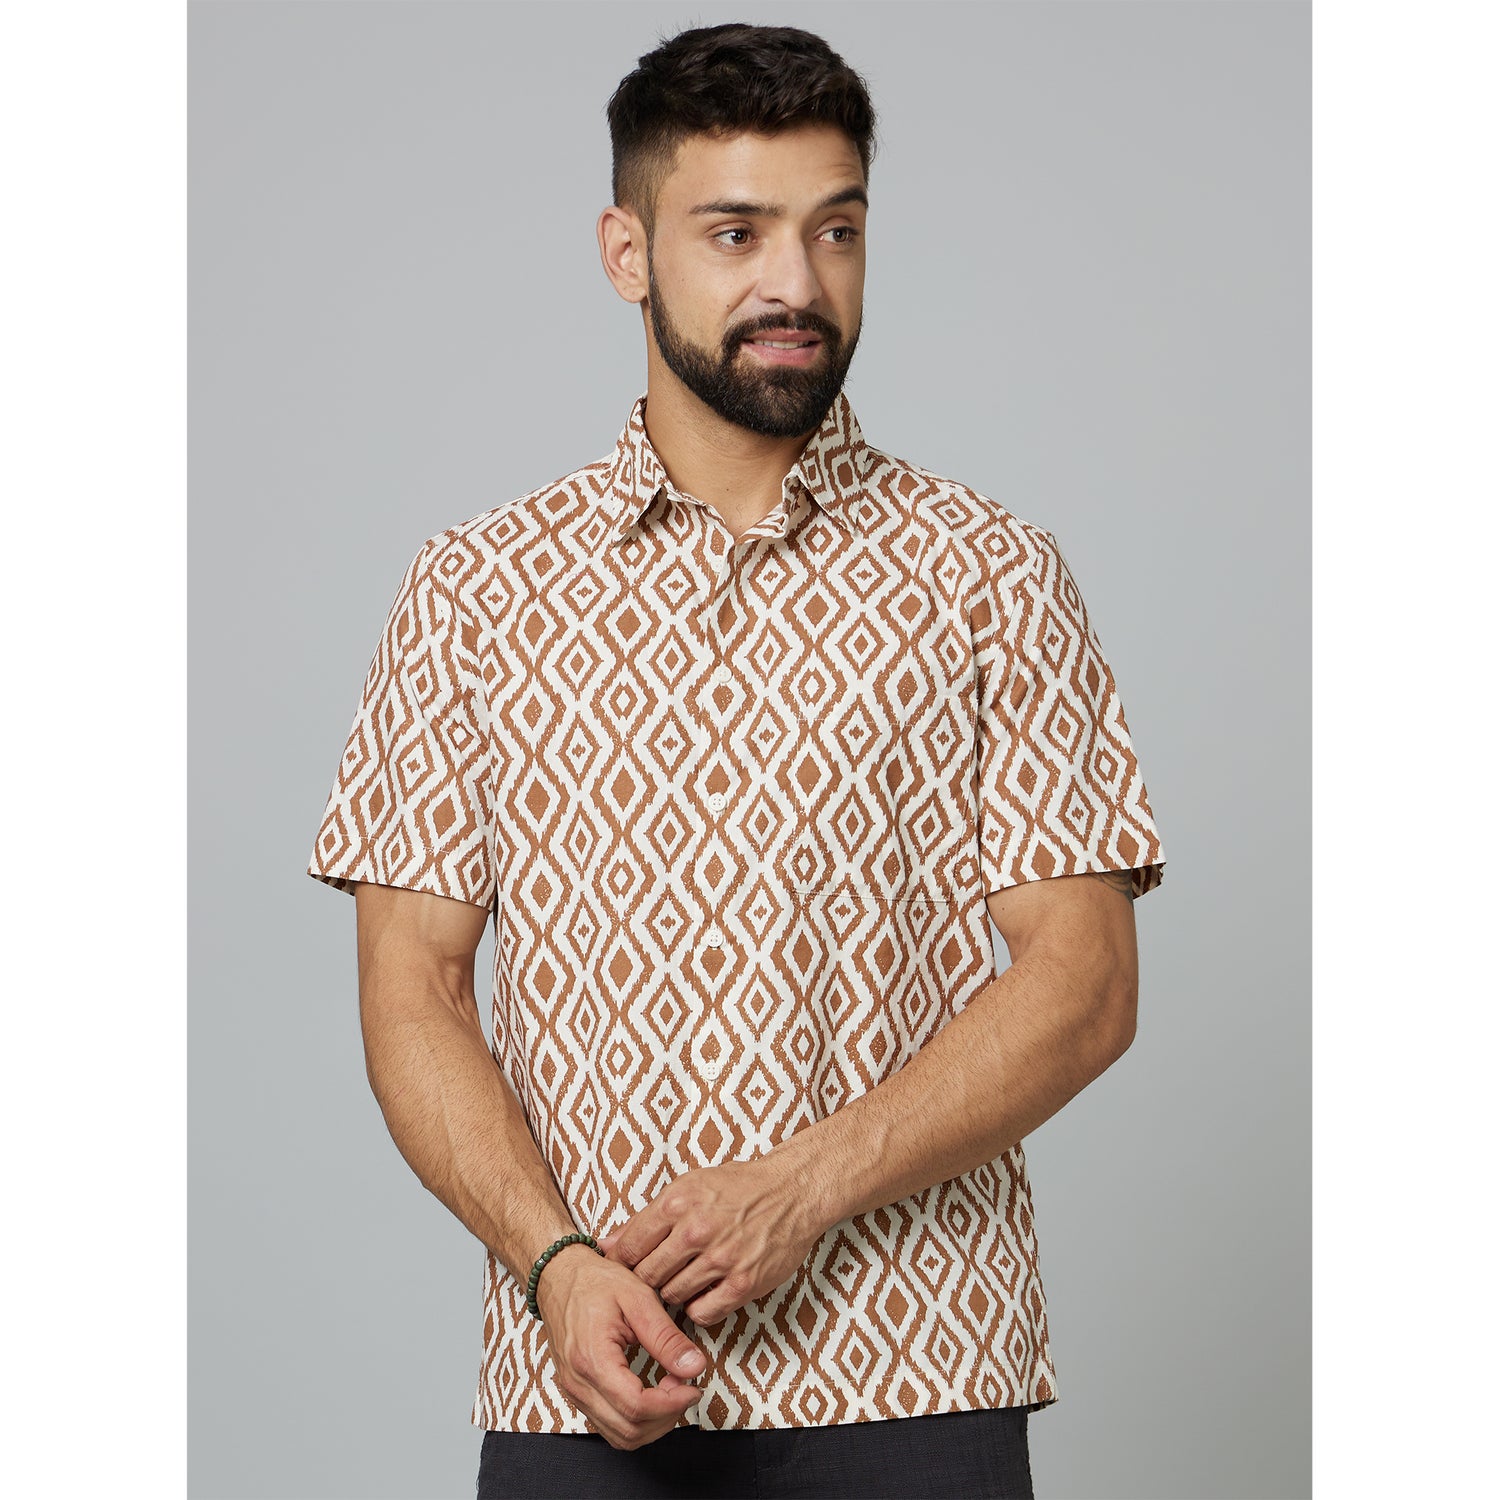 Brown Classic Geometric Printed Cotton Casual Shirt (DAPRINTA)